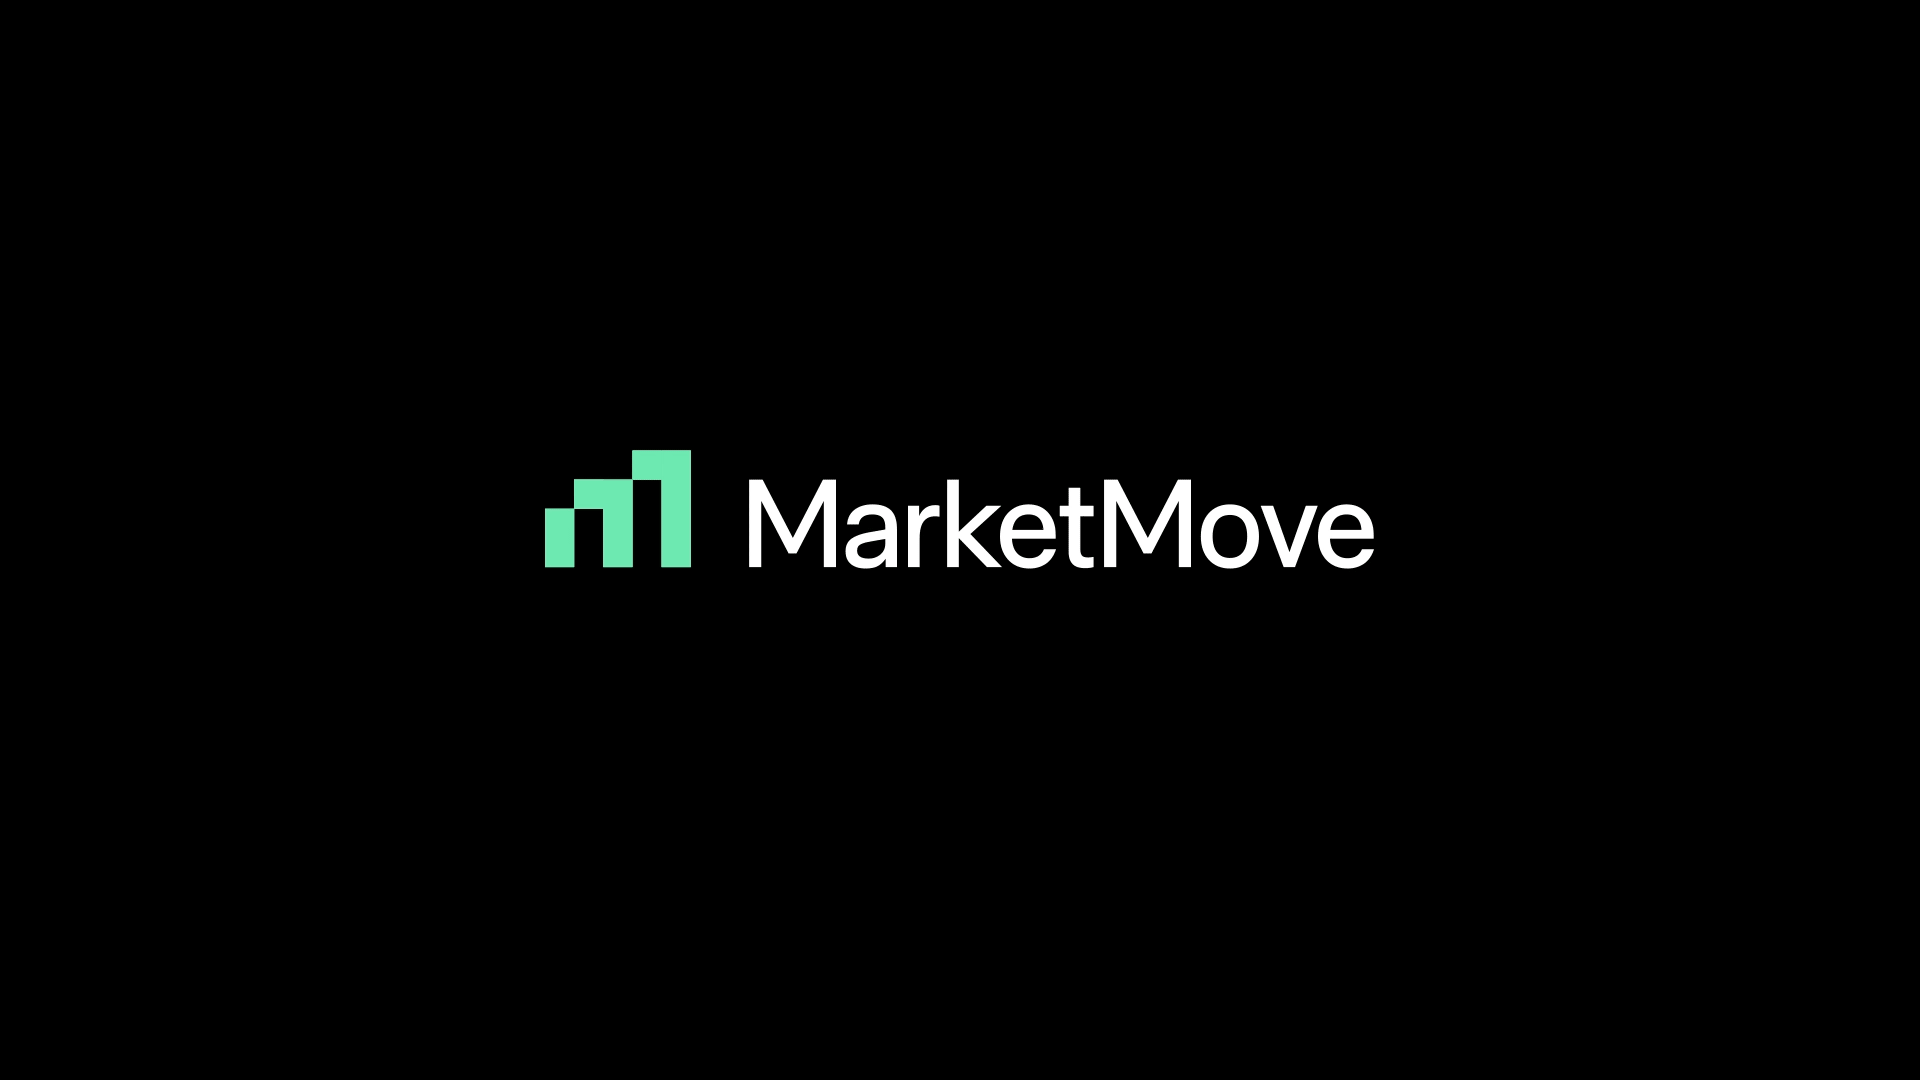 MarketMove